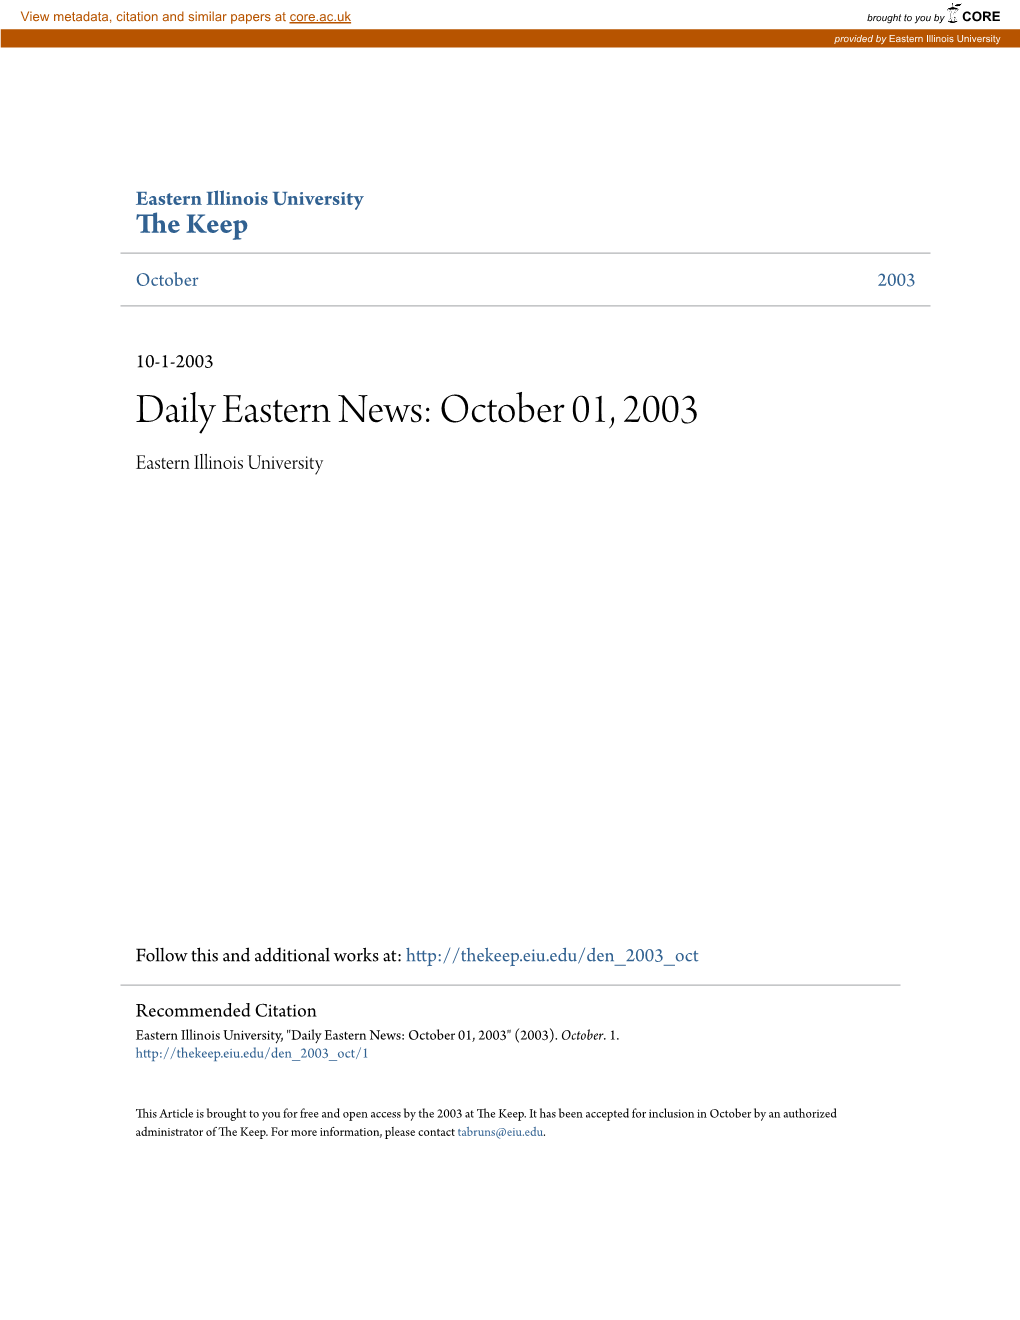 Daily Eastern News: October 01, 2003 Eastern Illinois University